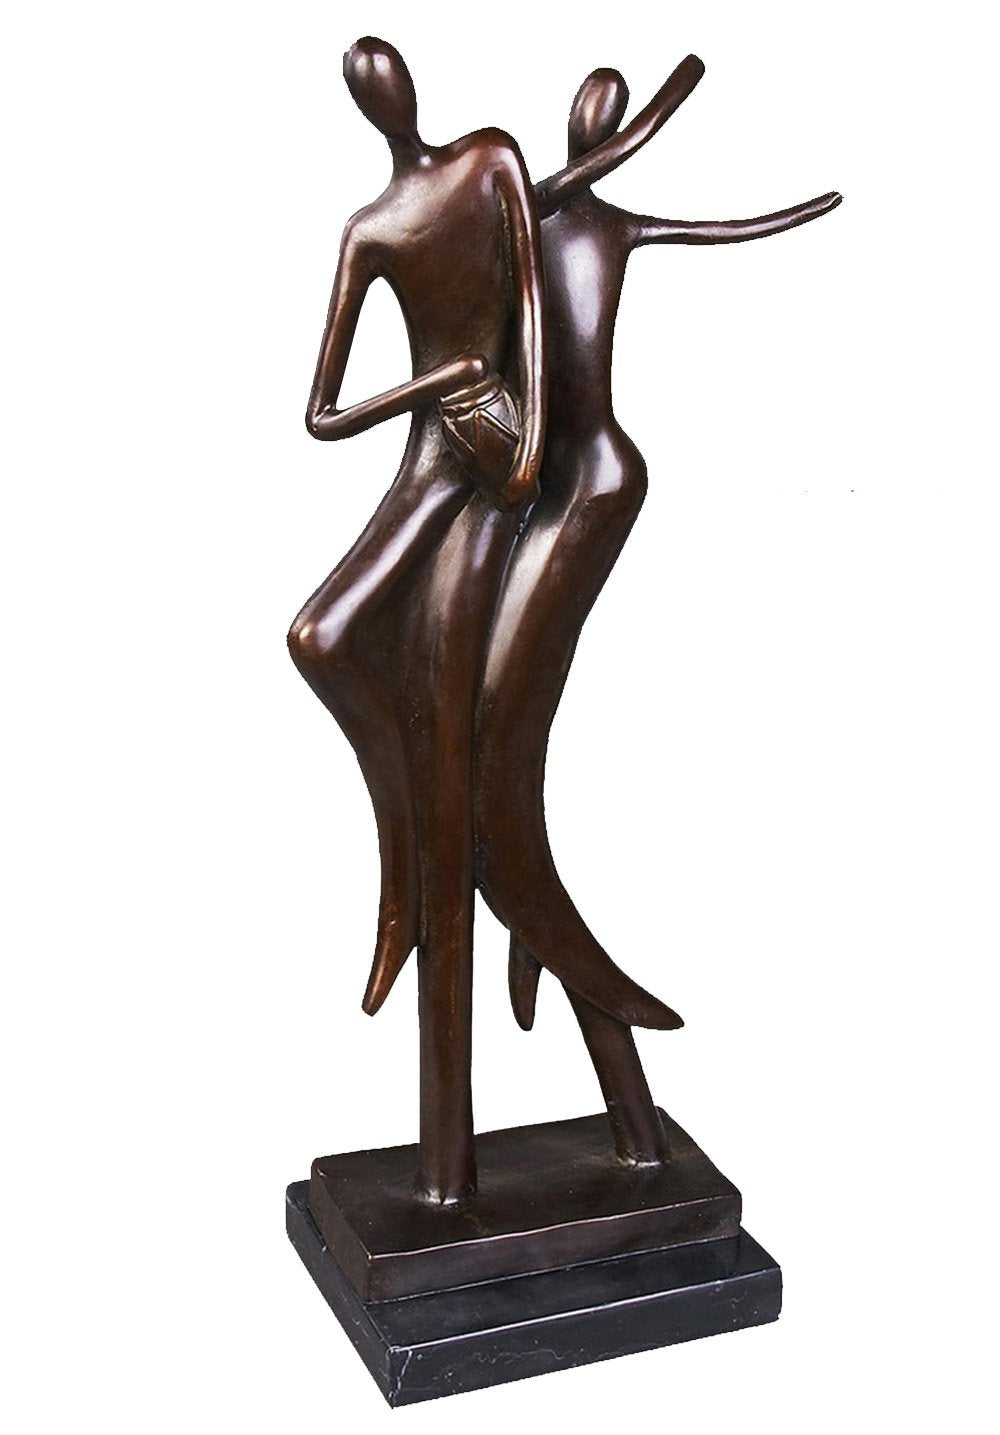 TPY-049 bronze sculpture